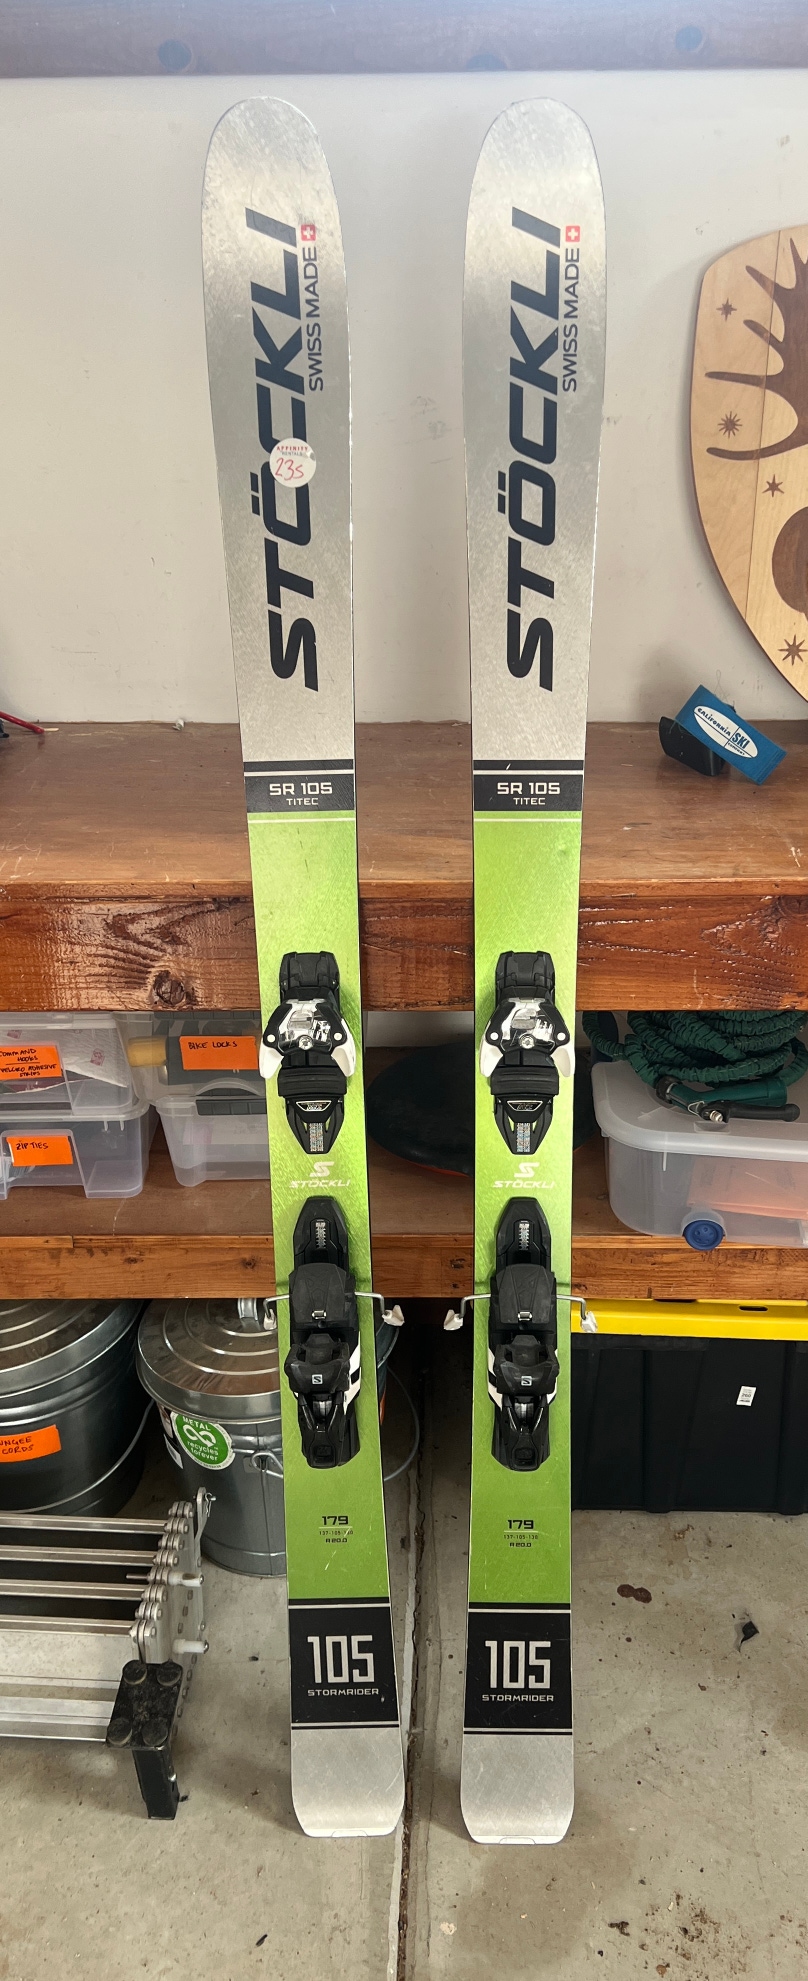 Stockli Stormrider 105 Skis in 179cm with Salomon Bindings